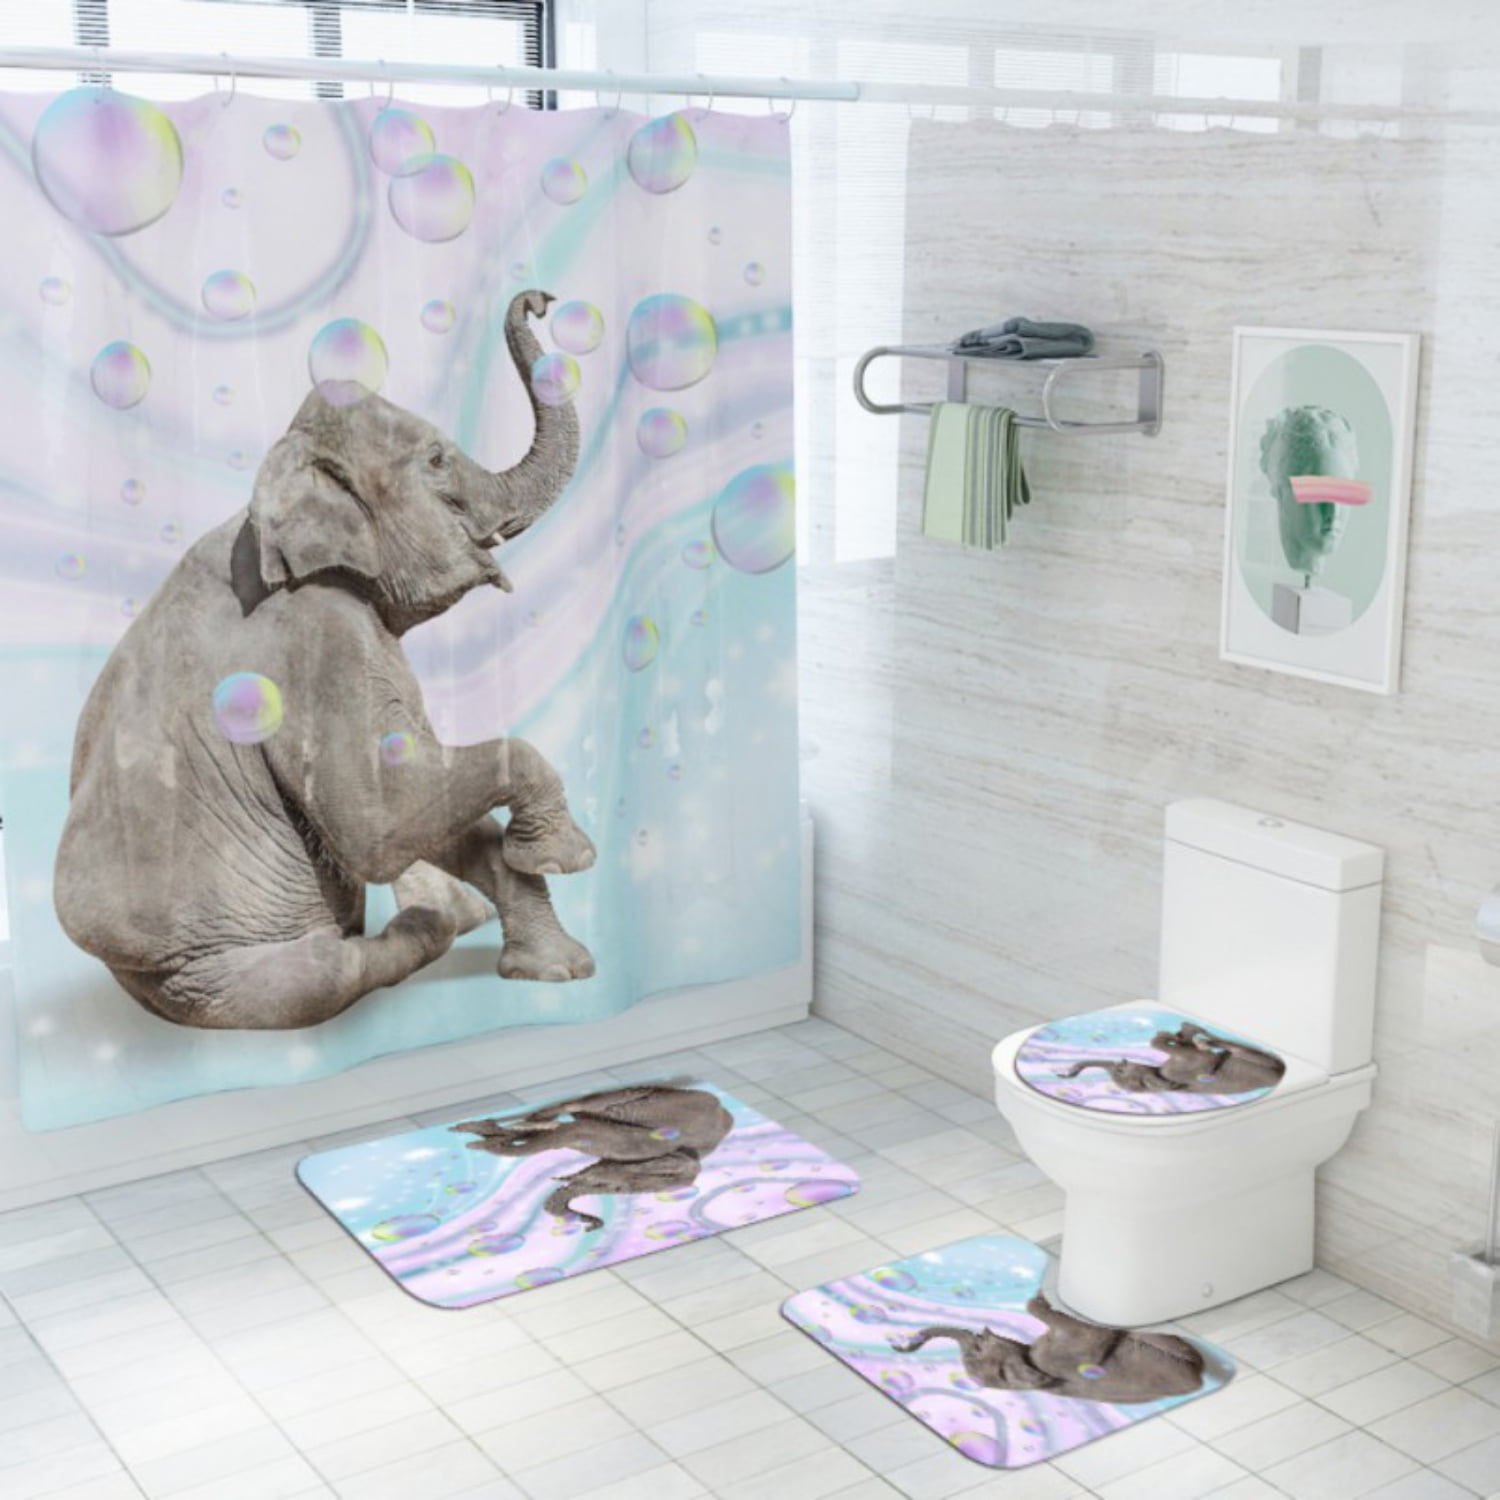 4pcs Bohemian Flower Bathroom Set, Waterproof Shower Curtain With 12 Hooks,  Non-Slip Bathroom Rug, Toilet U-Shape Mat, Toilet Lid Cover Pad, Aesthetic